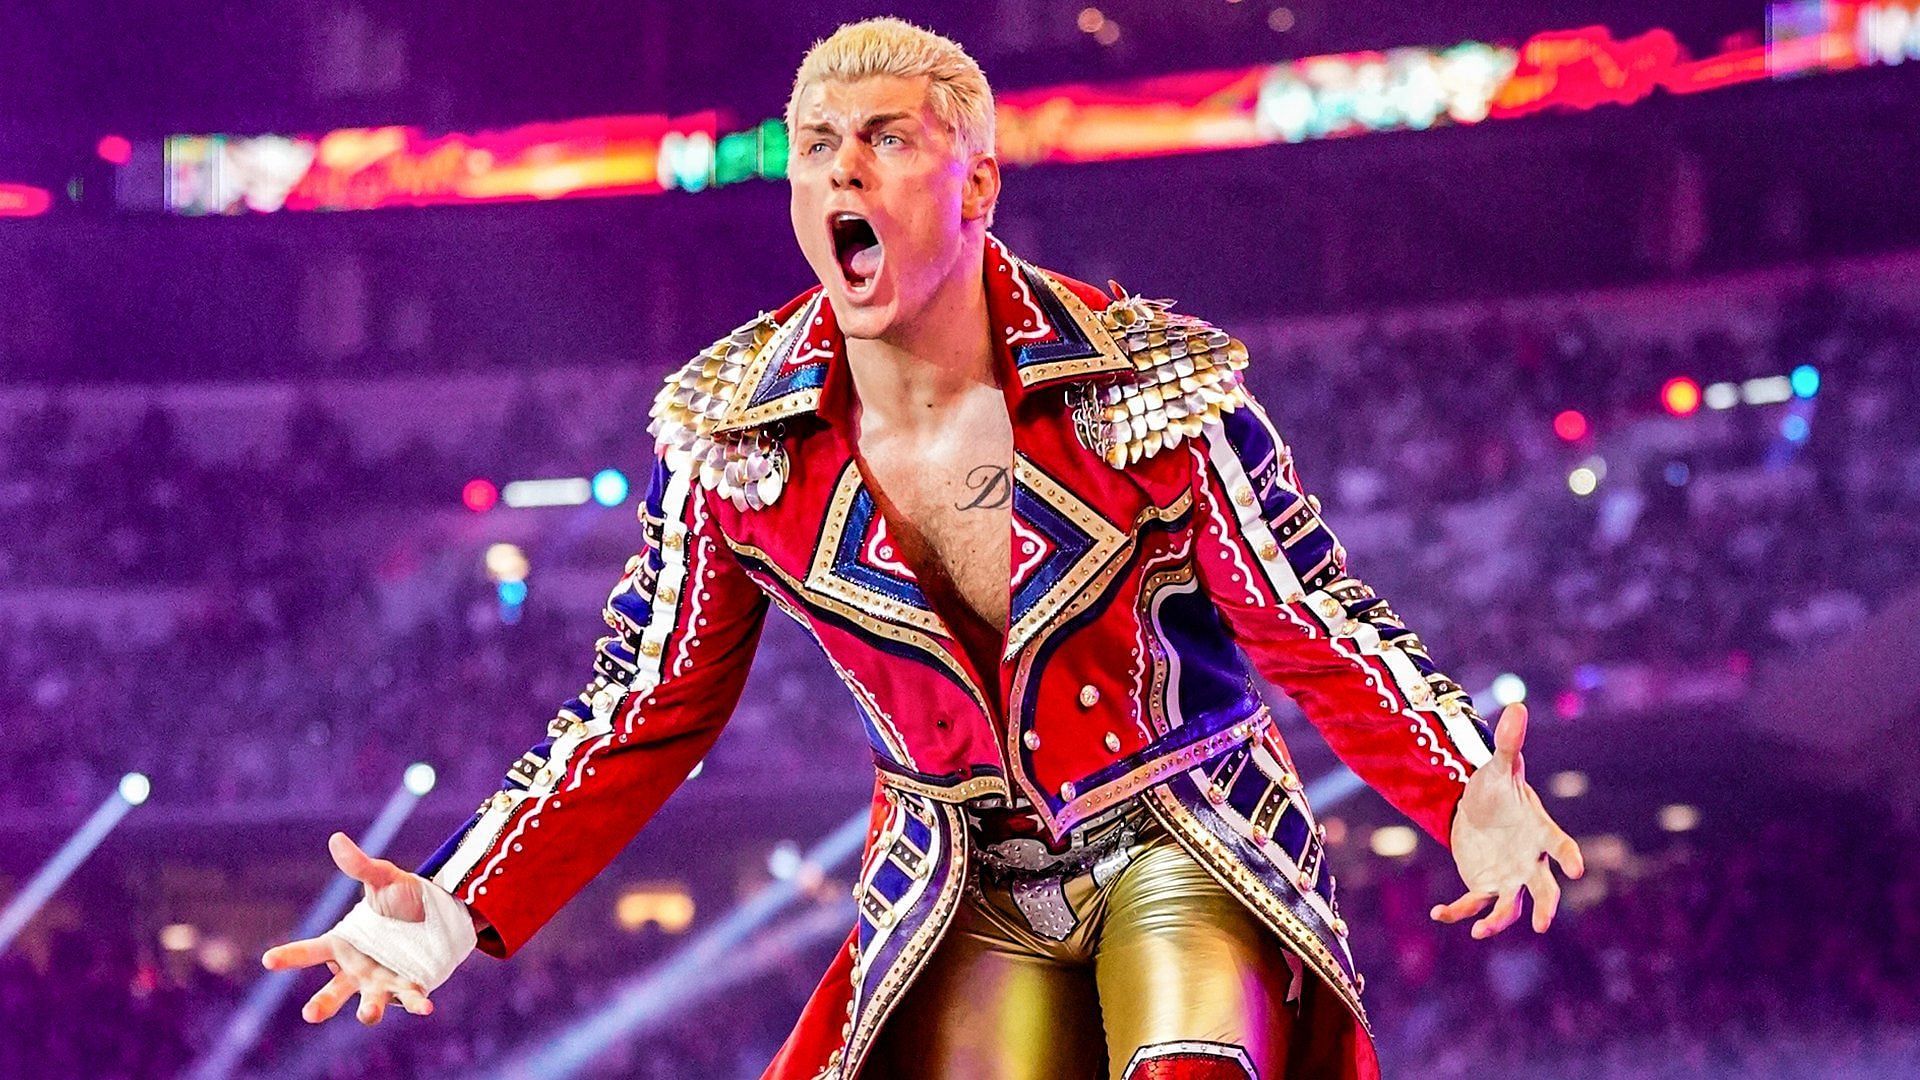 Cody Rhodes at WrestleMania